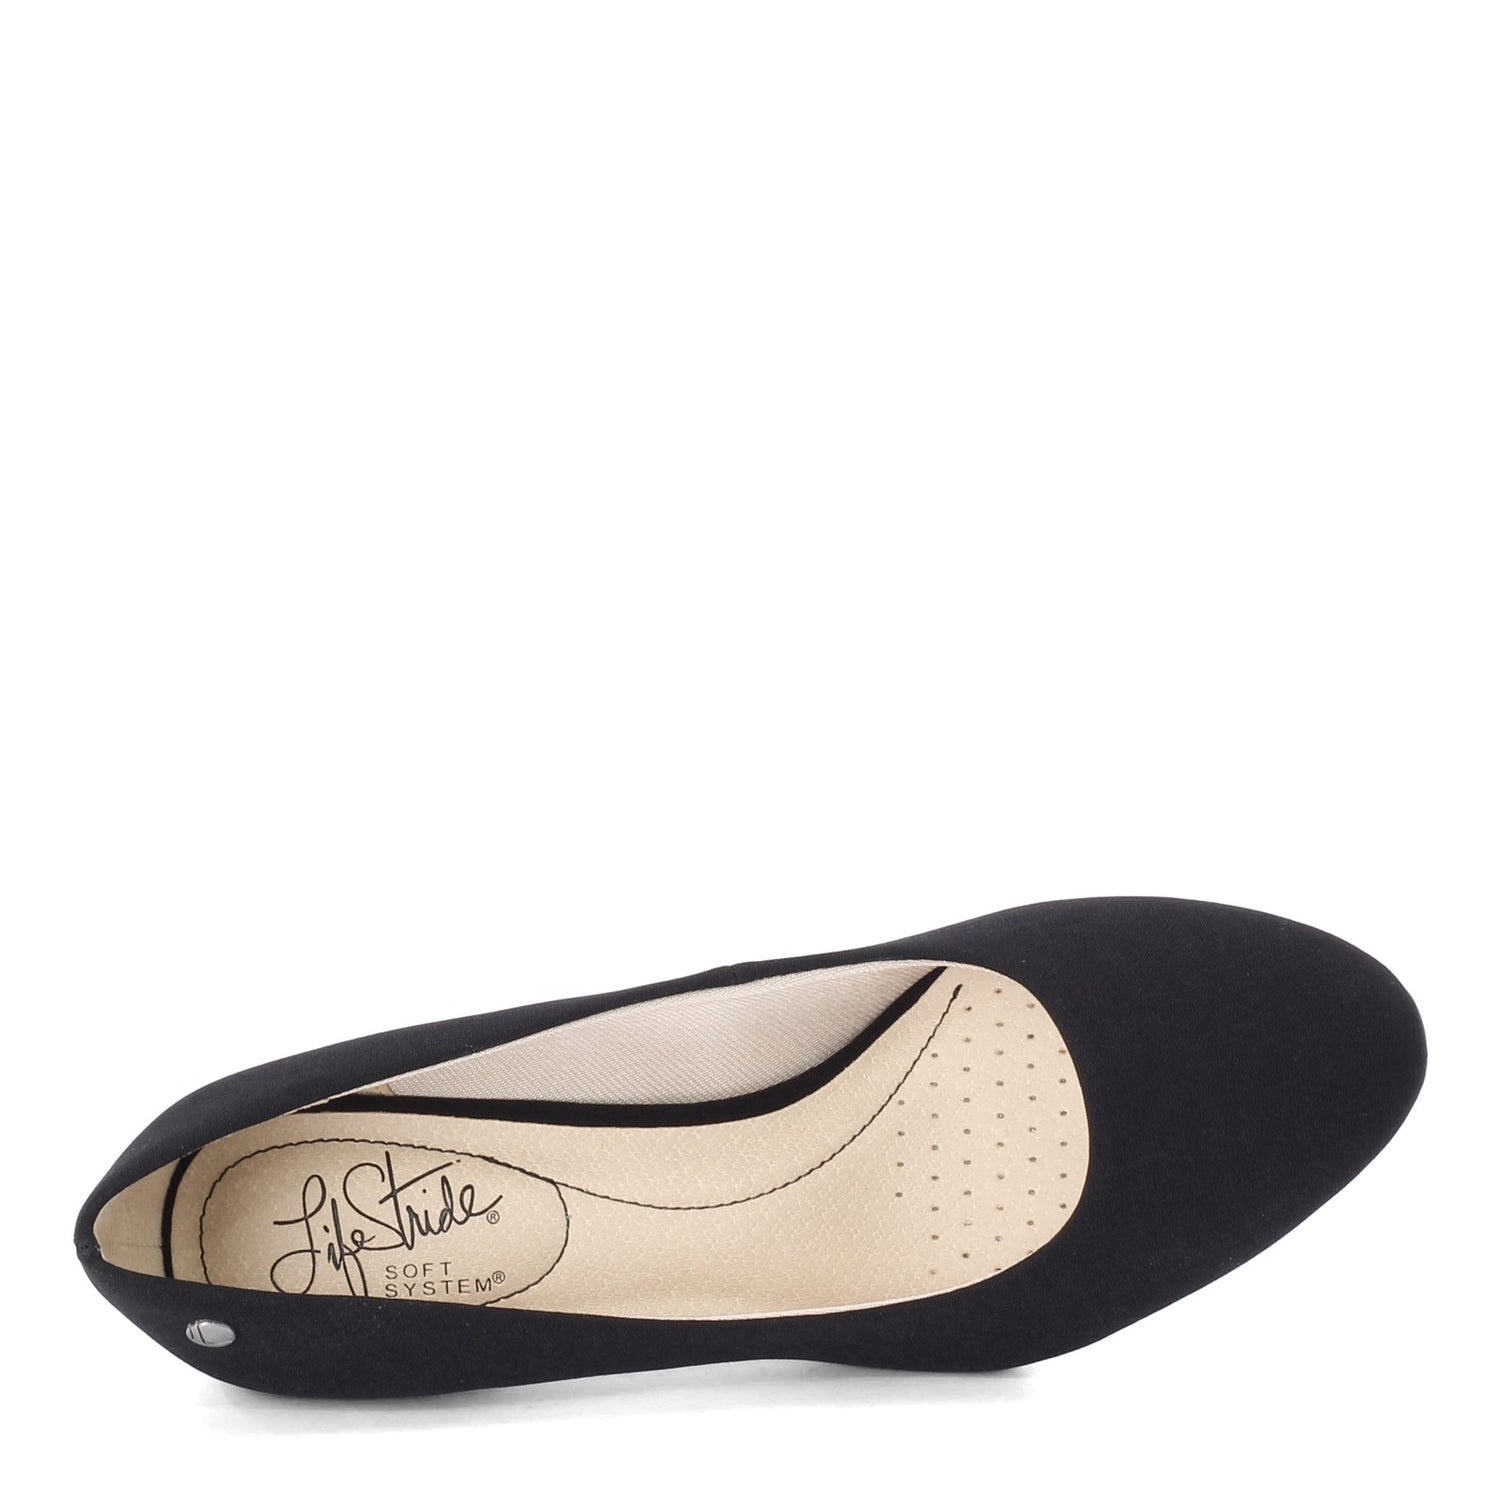 Peltz Shoes  Women's LifeStride Parigi Pump Black Micron B5988F2922